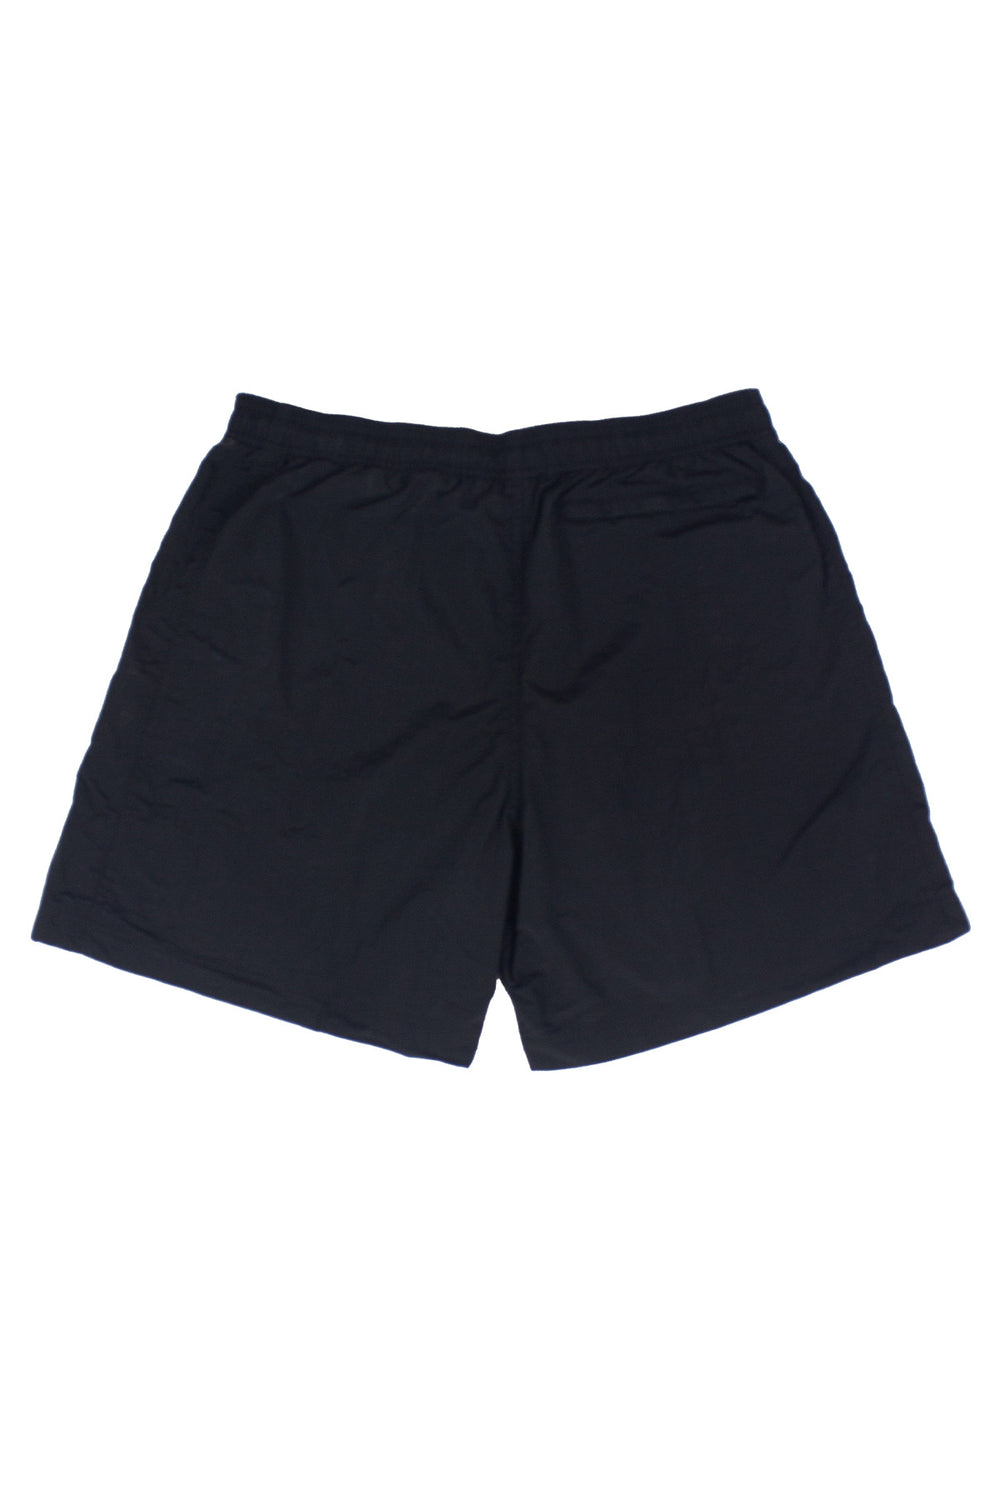 PMC | Mountaineering Nylon Shorts Black